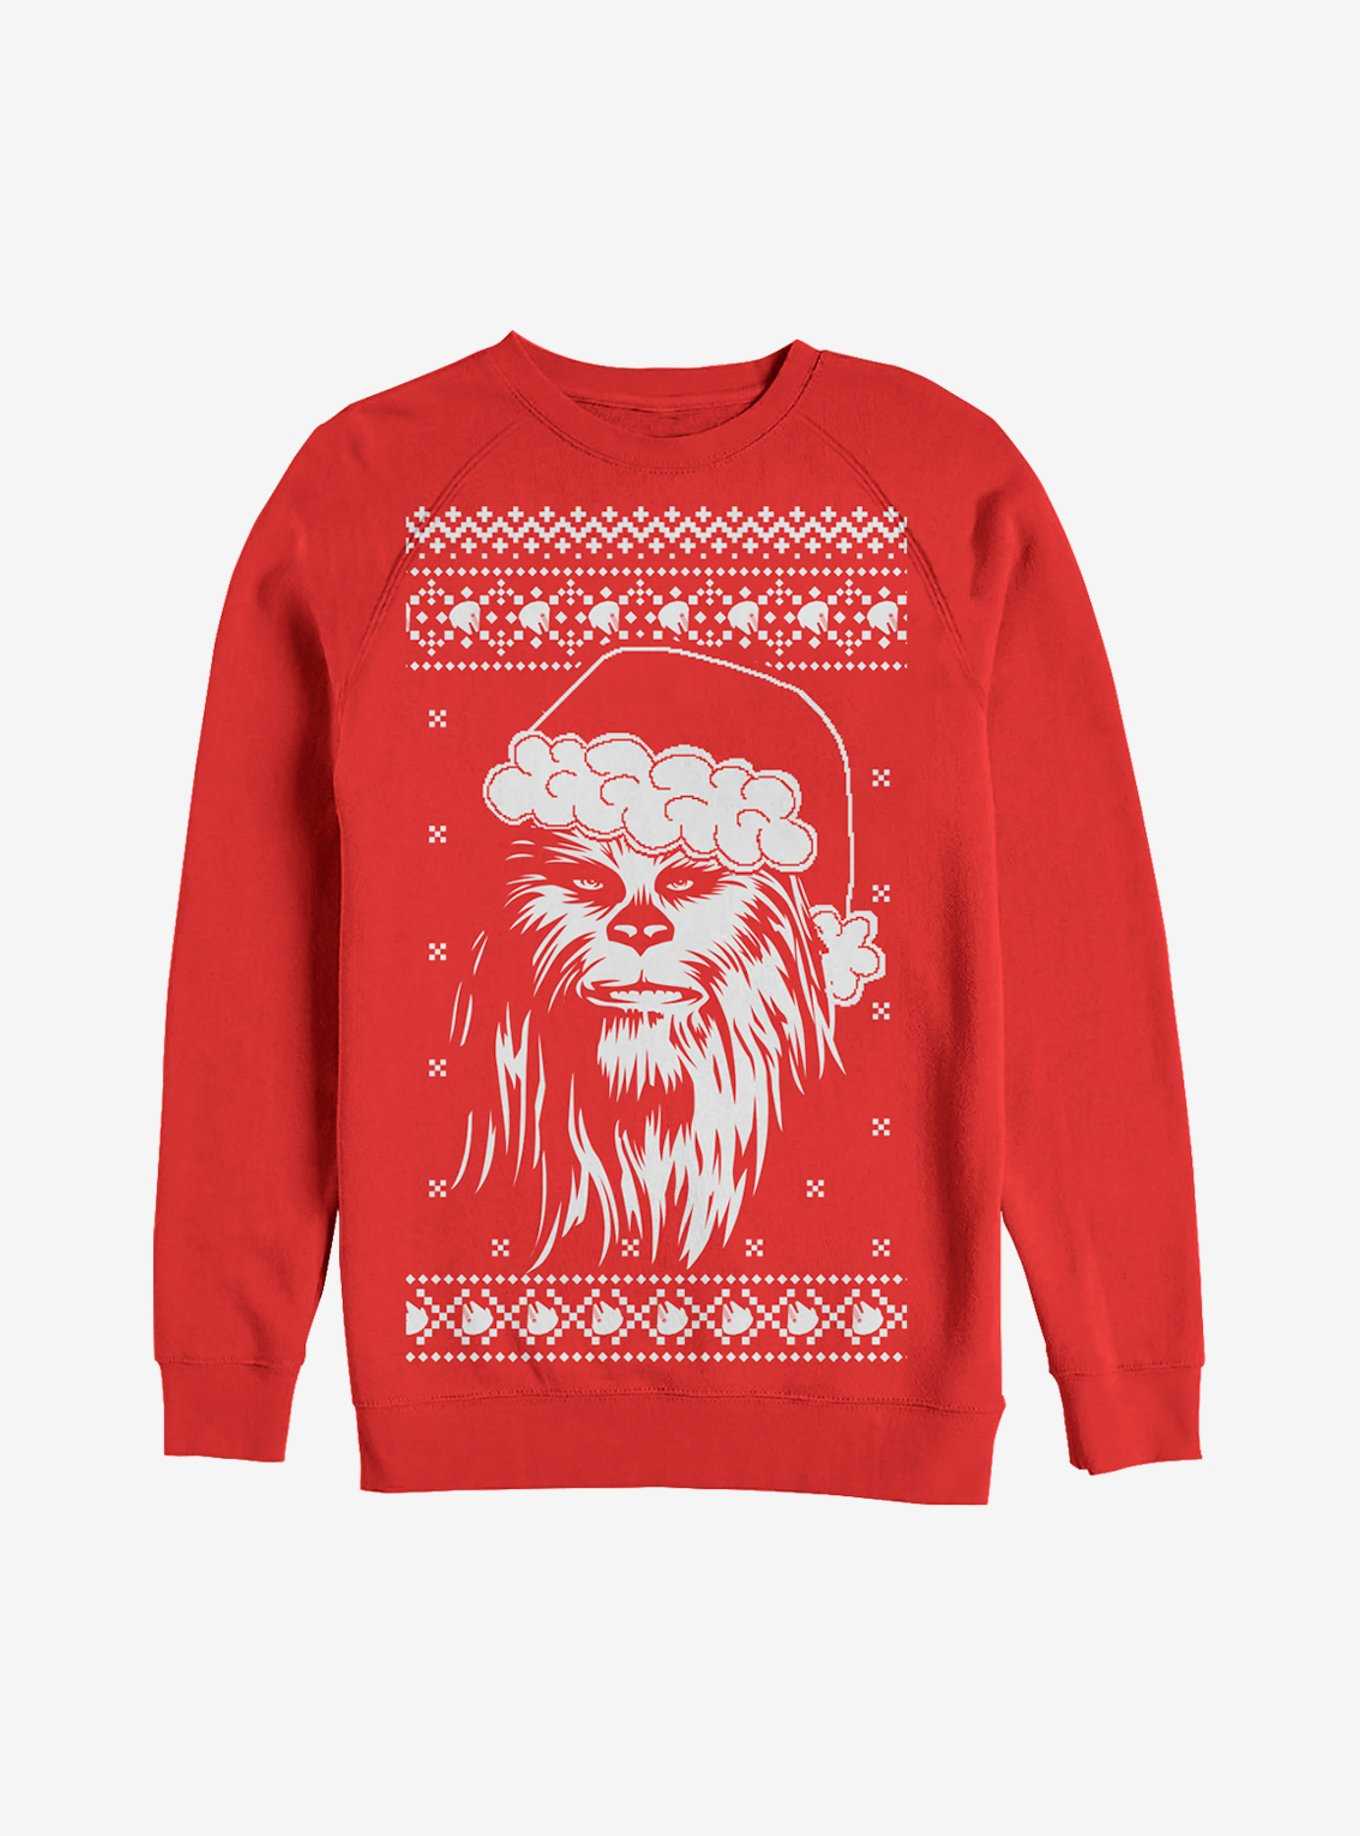 Star Wars Ugly Christmas Sweater Chewbacca Santa Sweatshirt, , hi-res